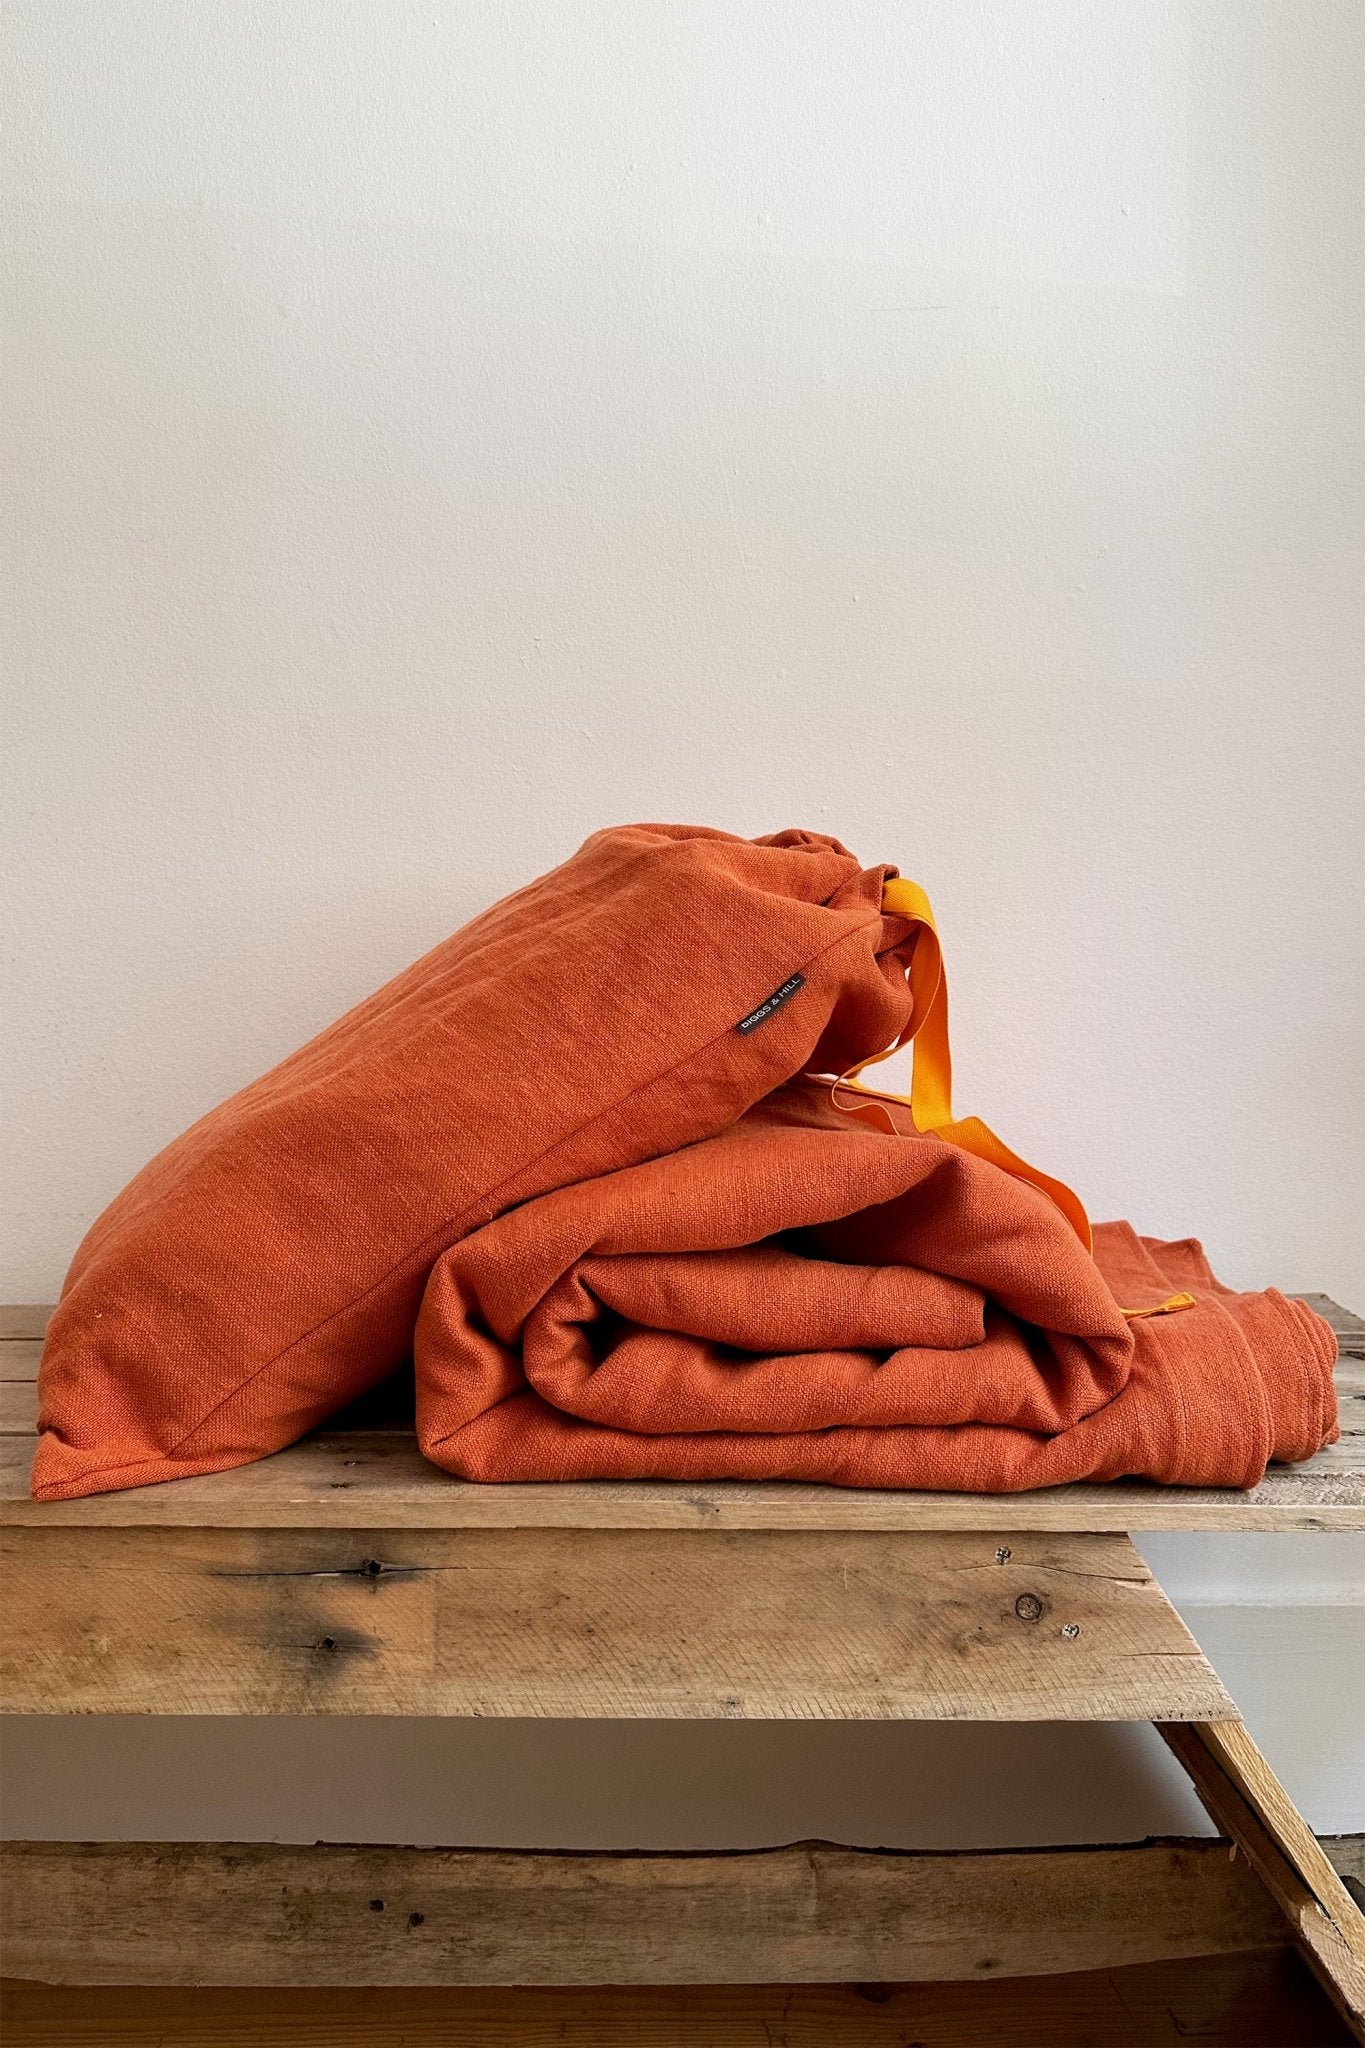 Utility Bed Throw Stonewashed Linen Blanket in Orange - Biggs & Hill - Blanket - Bedspread - blanket - charcoal